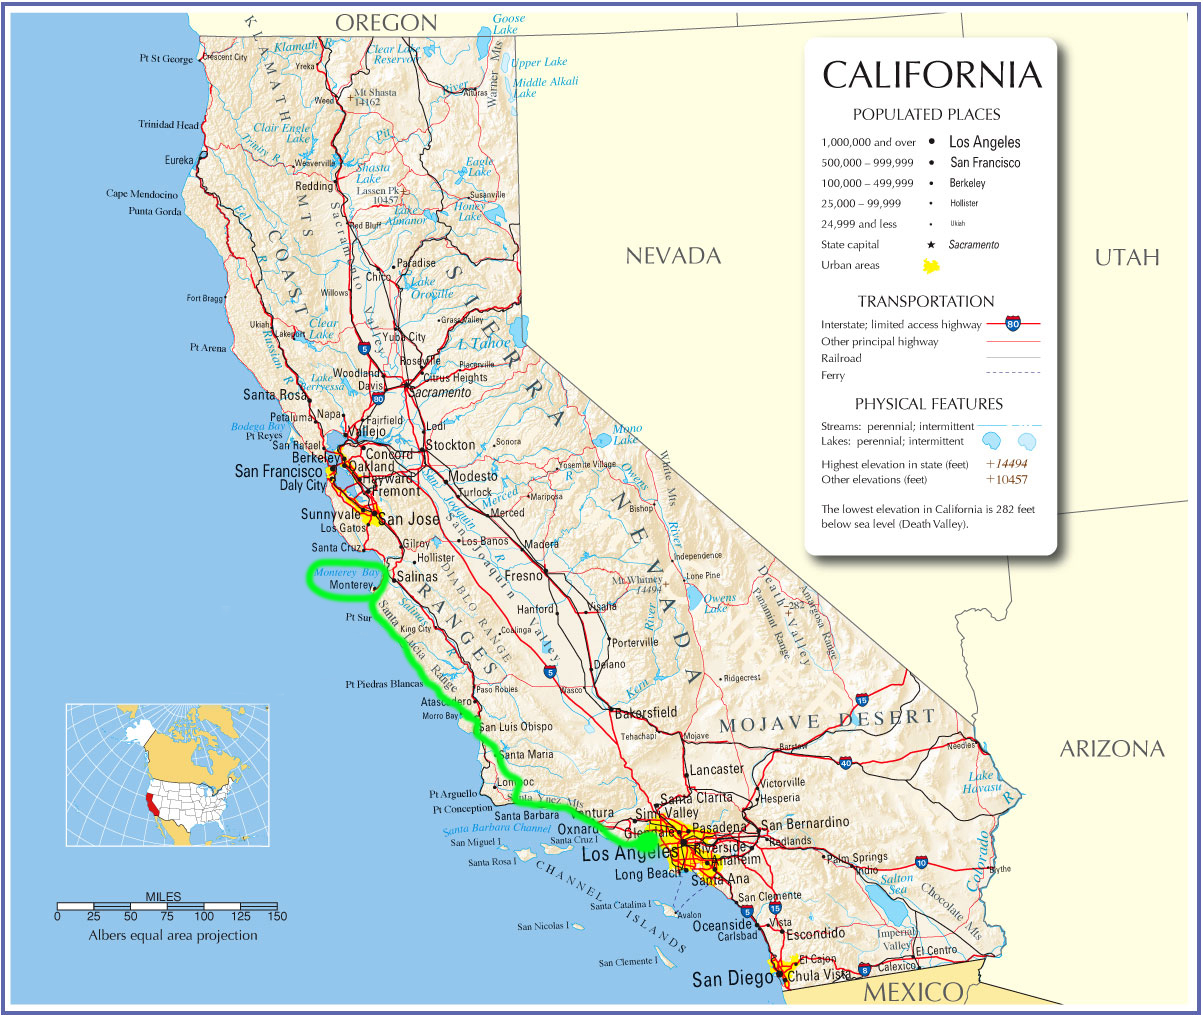 California Pacific Coast Highway Map - Klipy - Map Of California Coastline